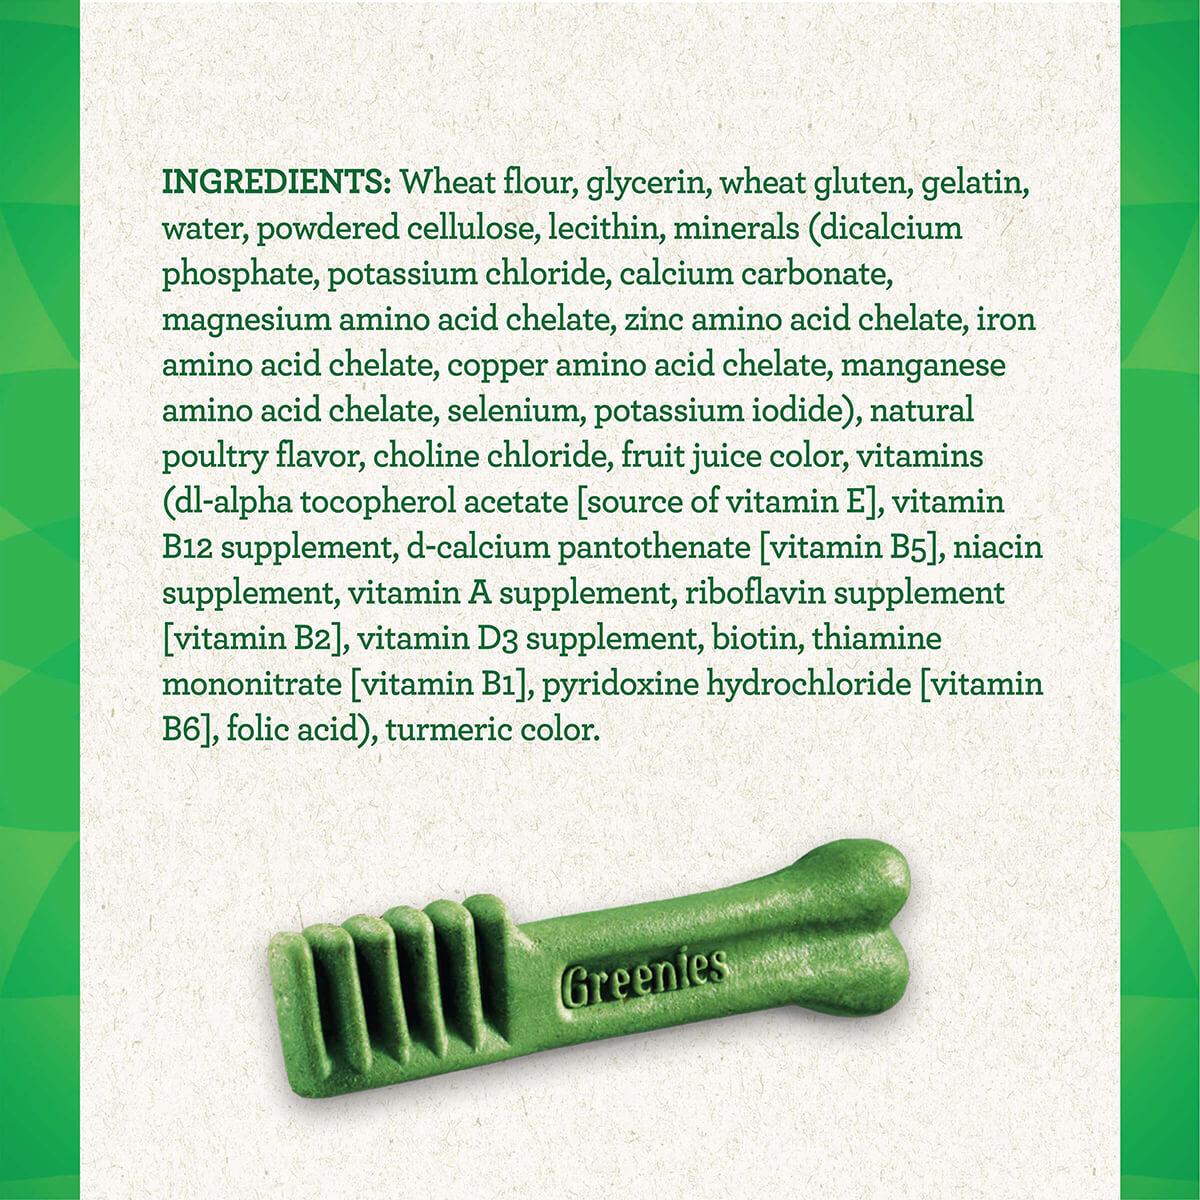 Greenies Original Petite Dental Dog Treats 60 Value Pack 1.02Kg